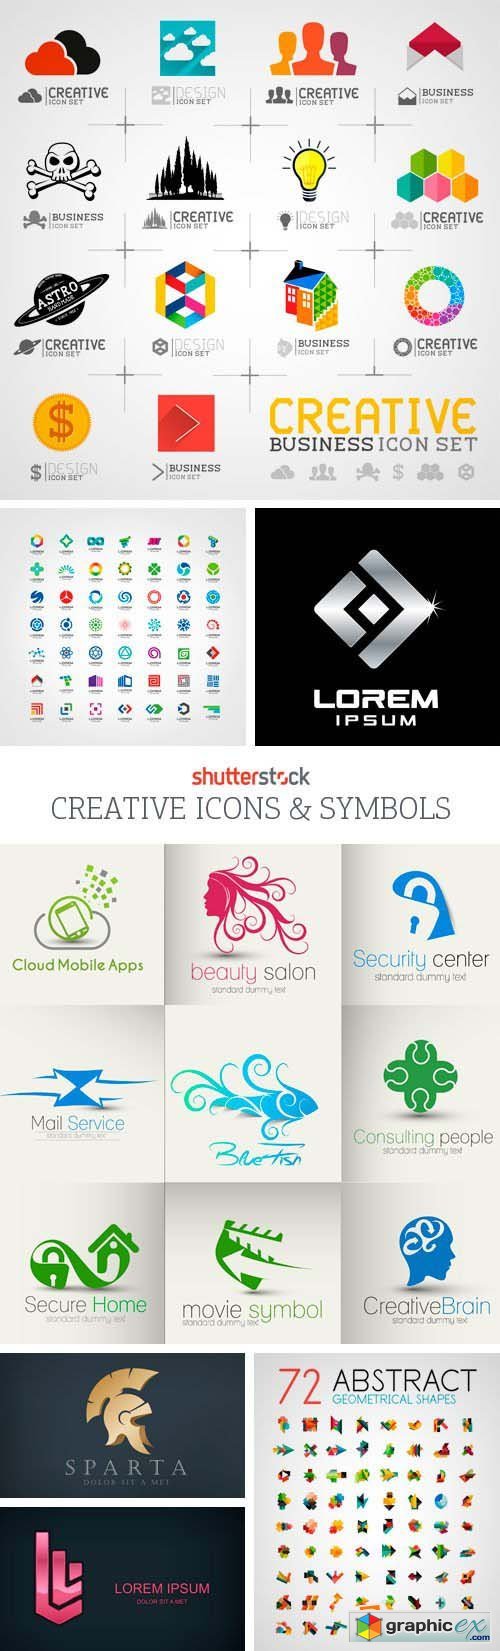 Amazing SS - Creative Icons & Symbols, 25xEPS